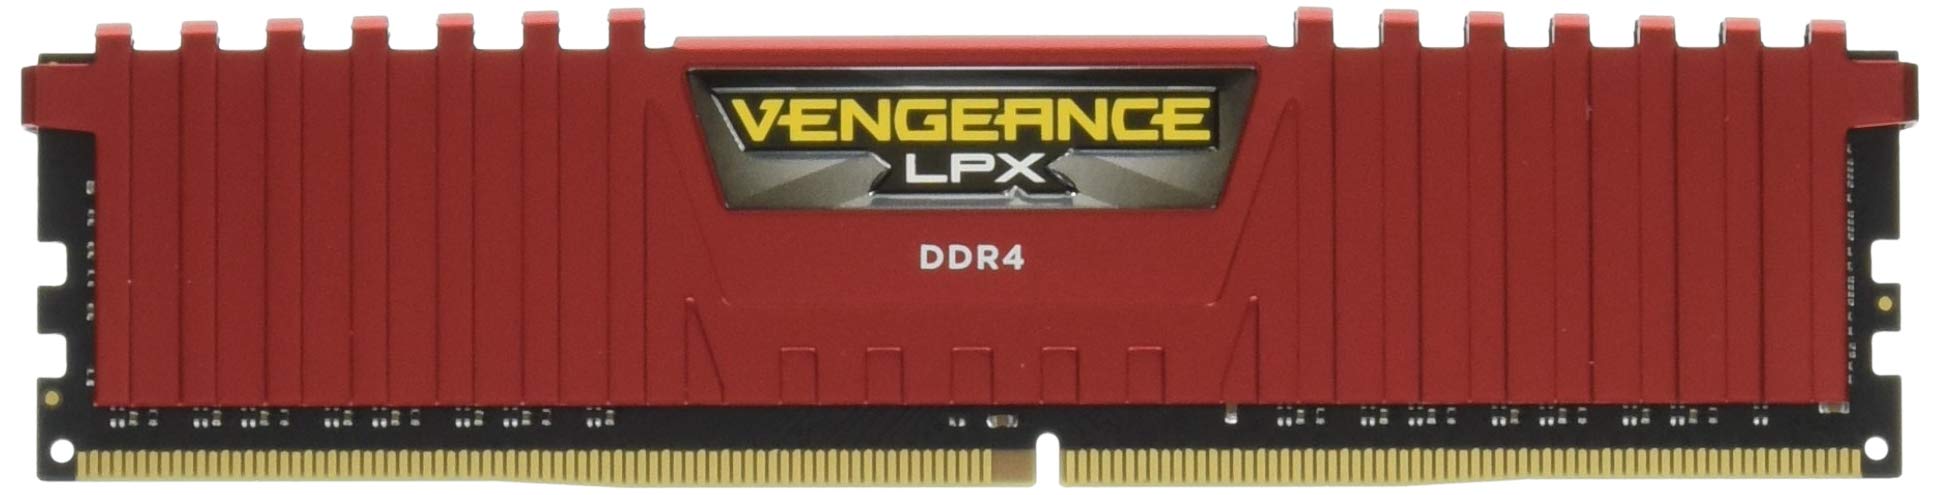 CORSAIR DDR4 メモリモジュール VENGEANCE LPX Series 8GB1枚キット CMK8GX4M1A2400C14R並行輸入品